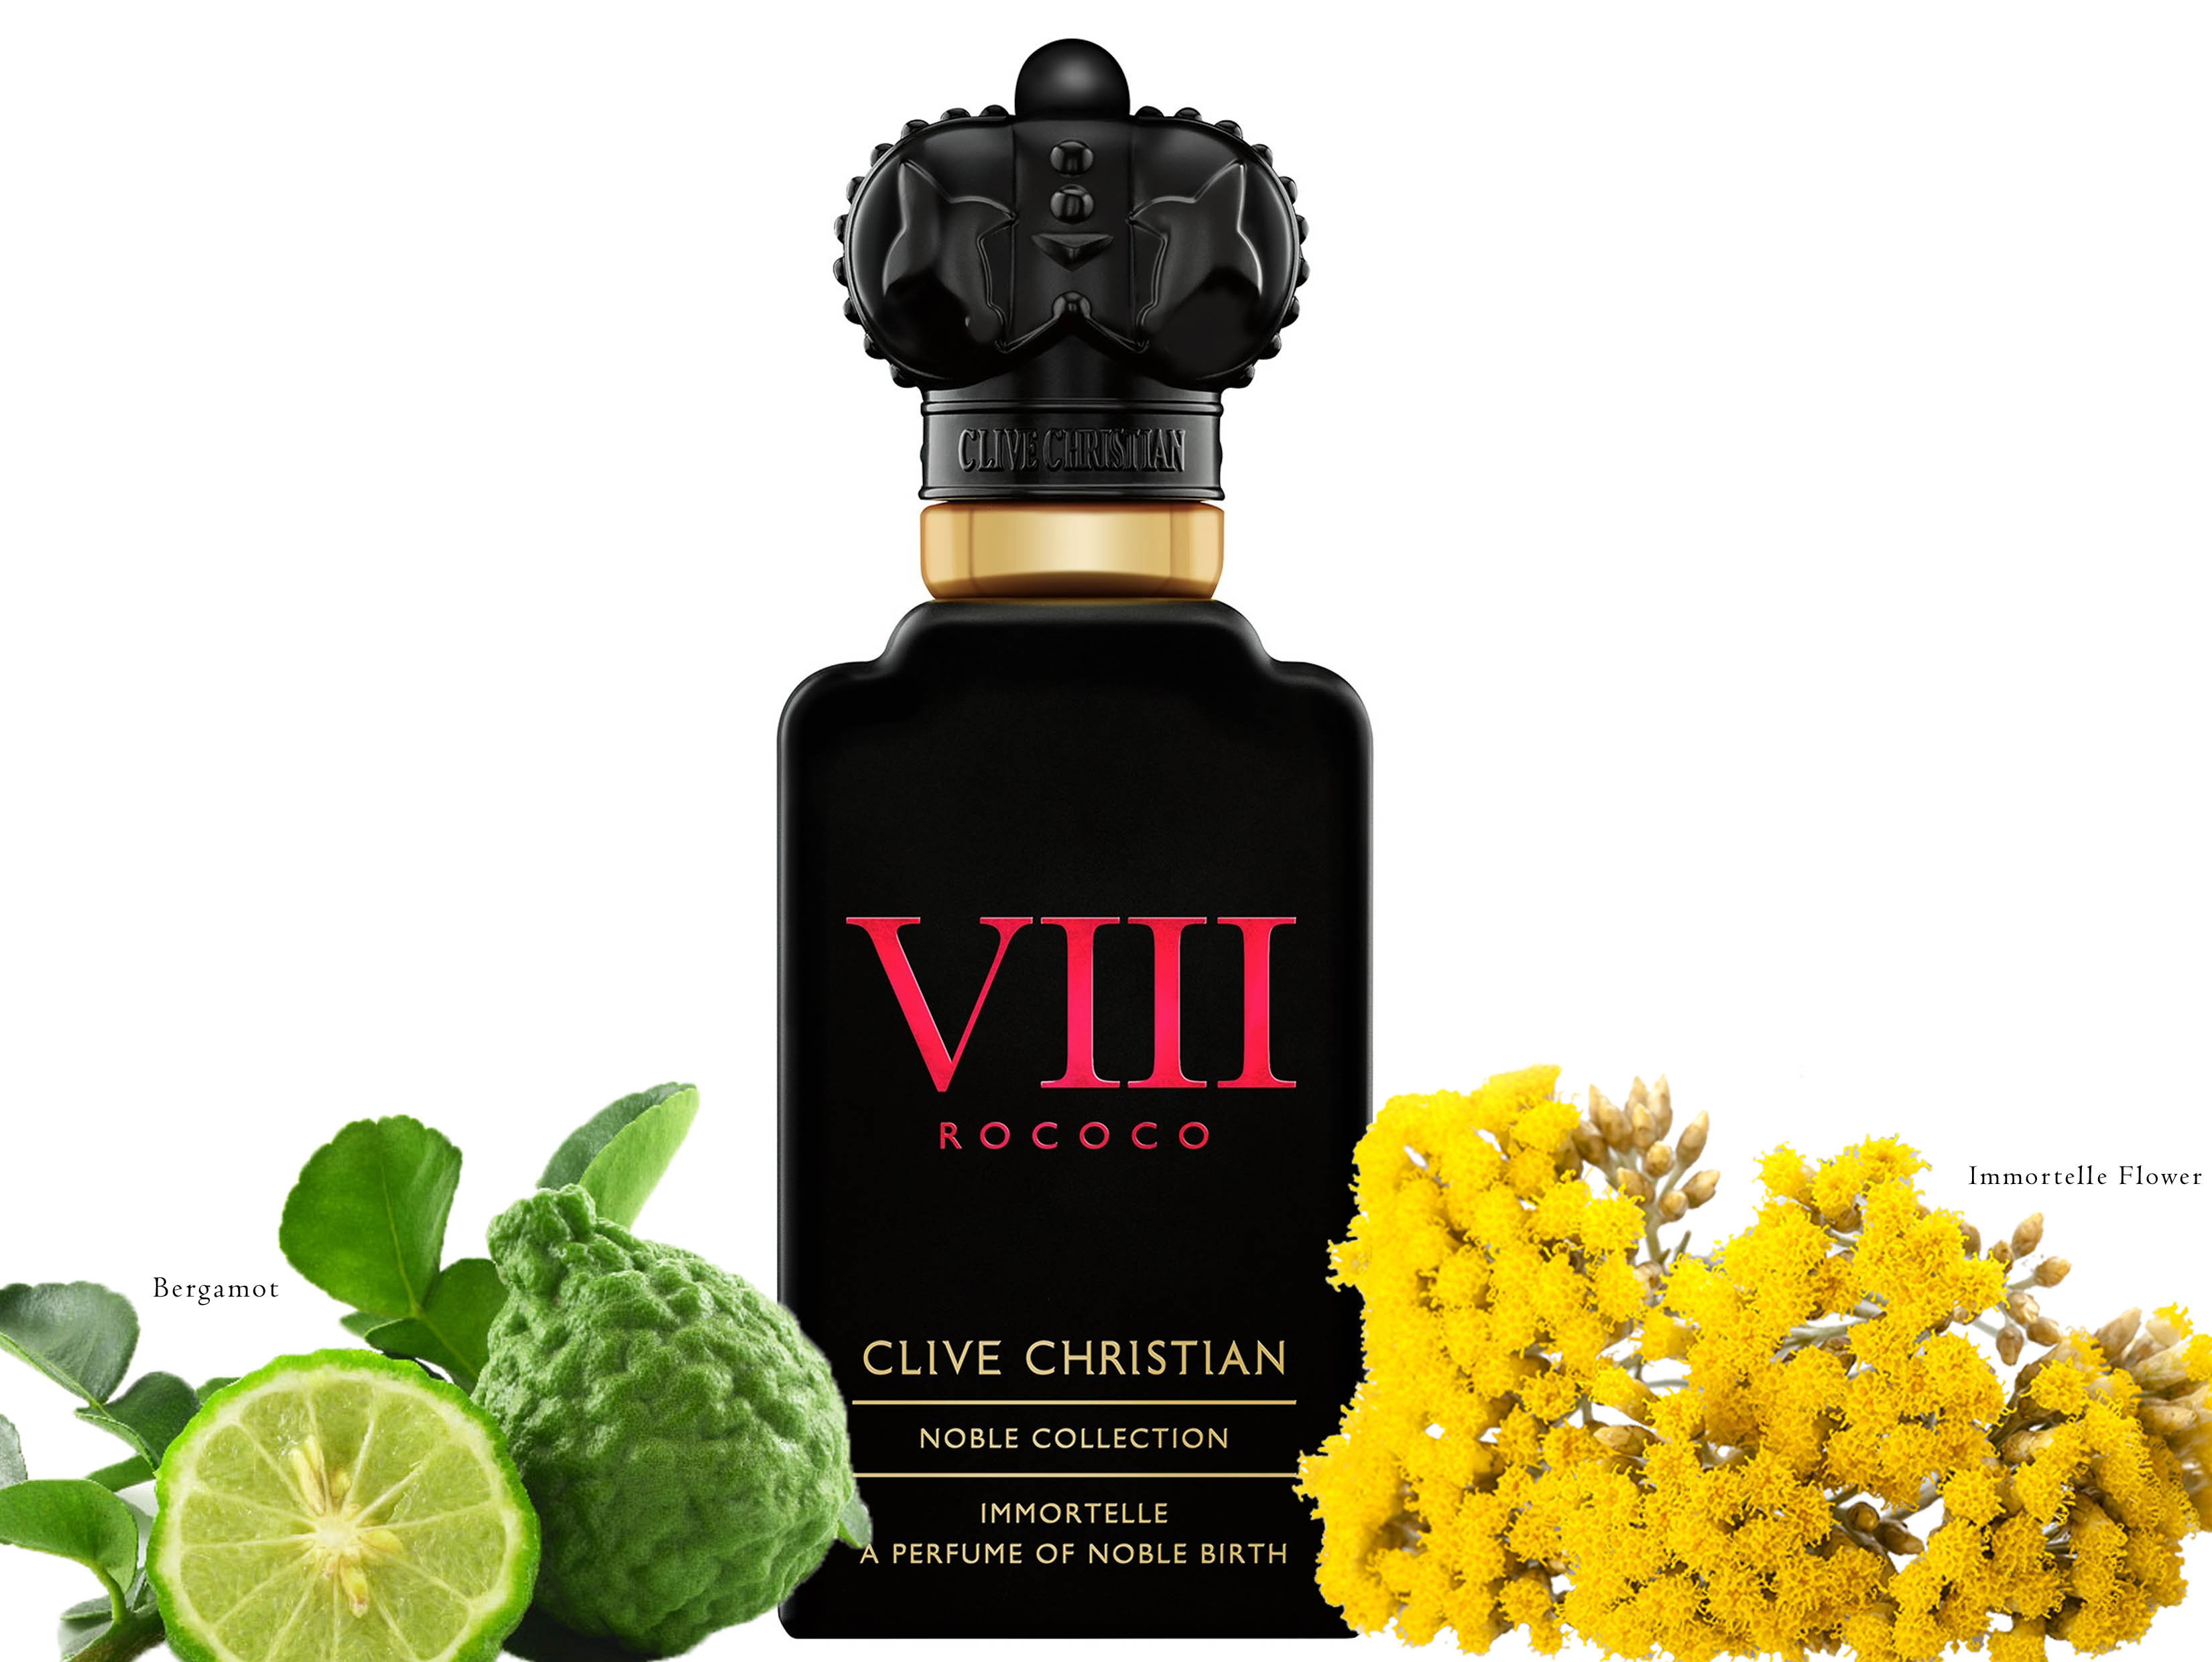 Clive Christian immortelle fragrance